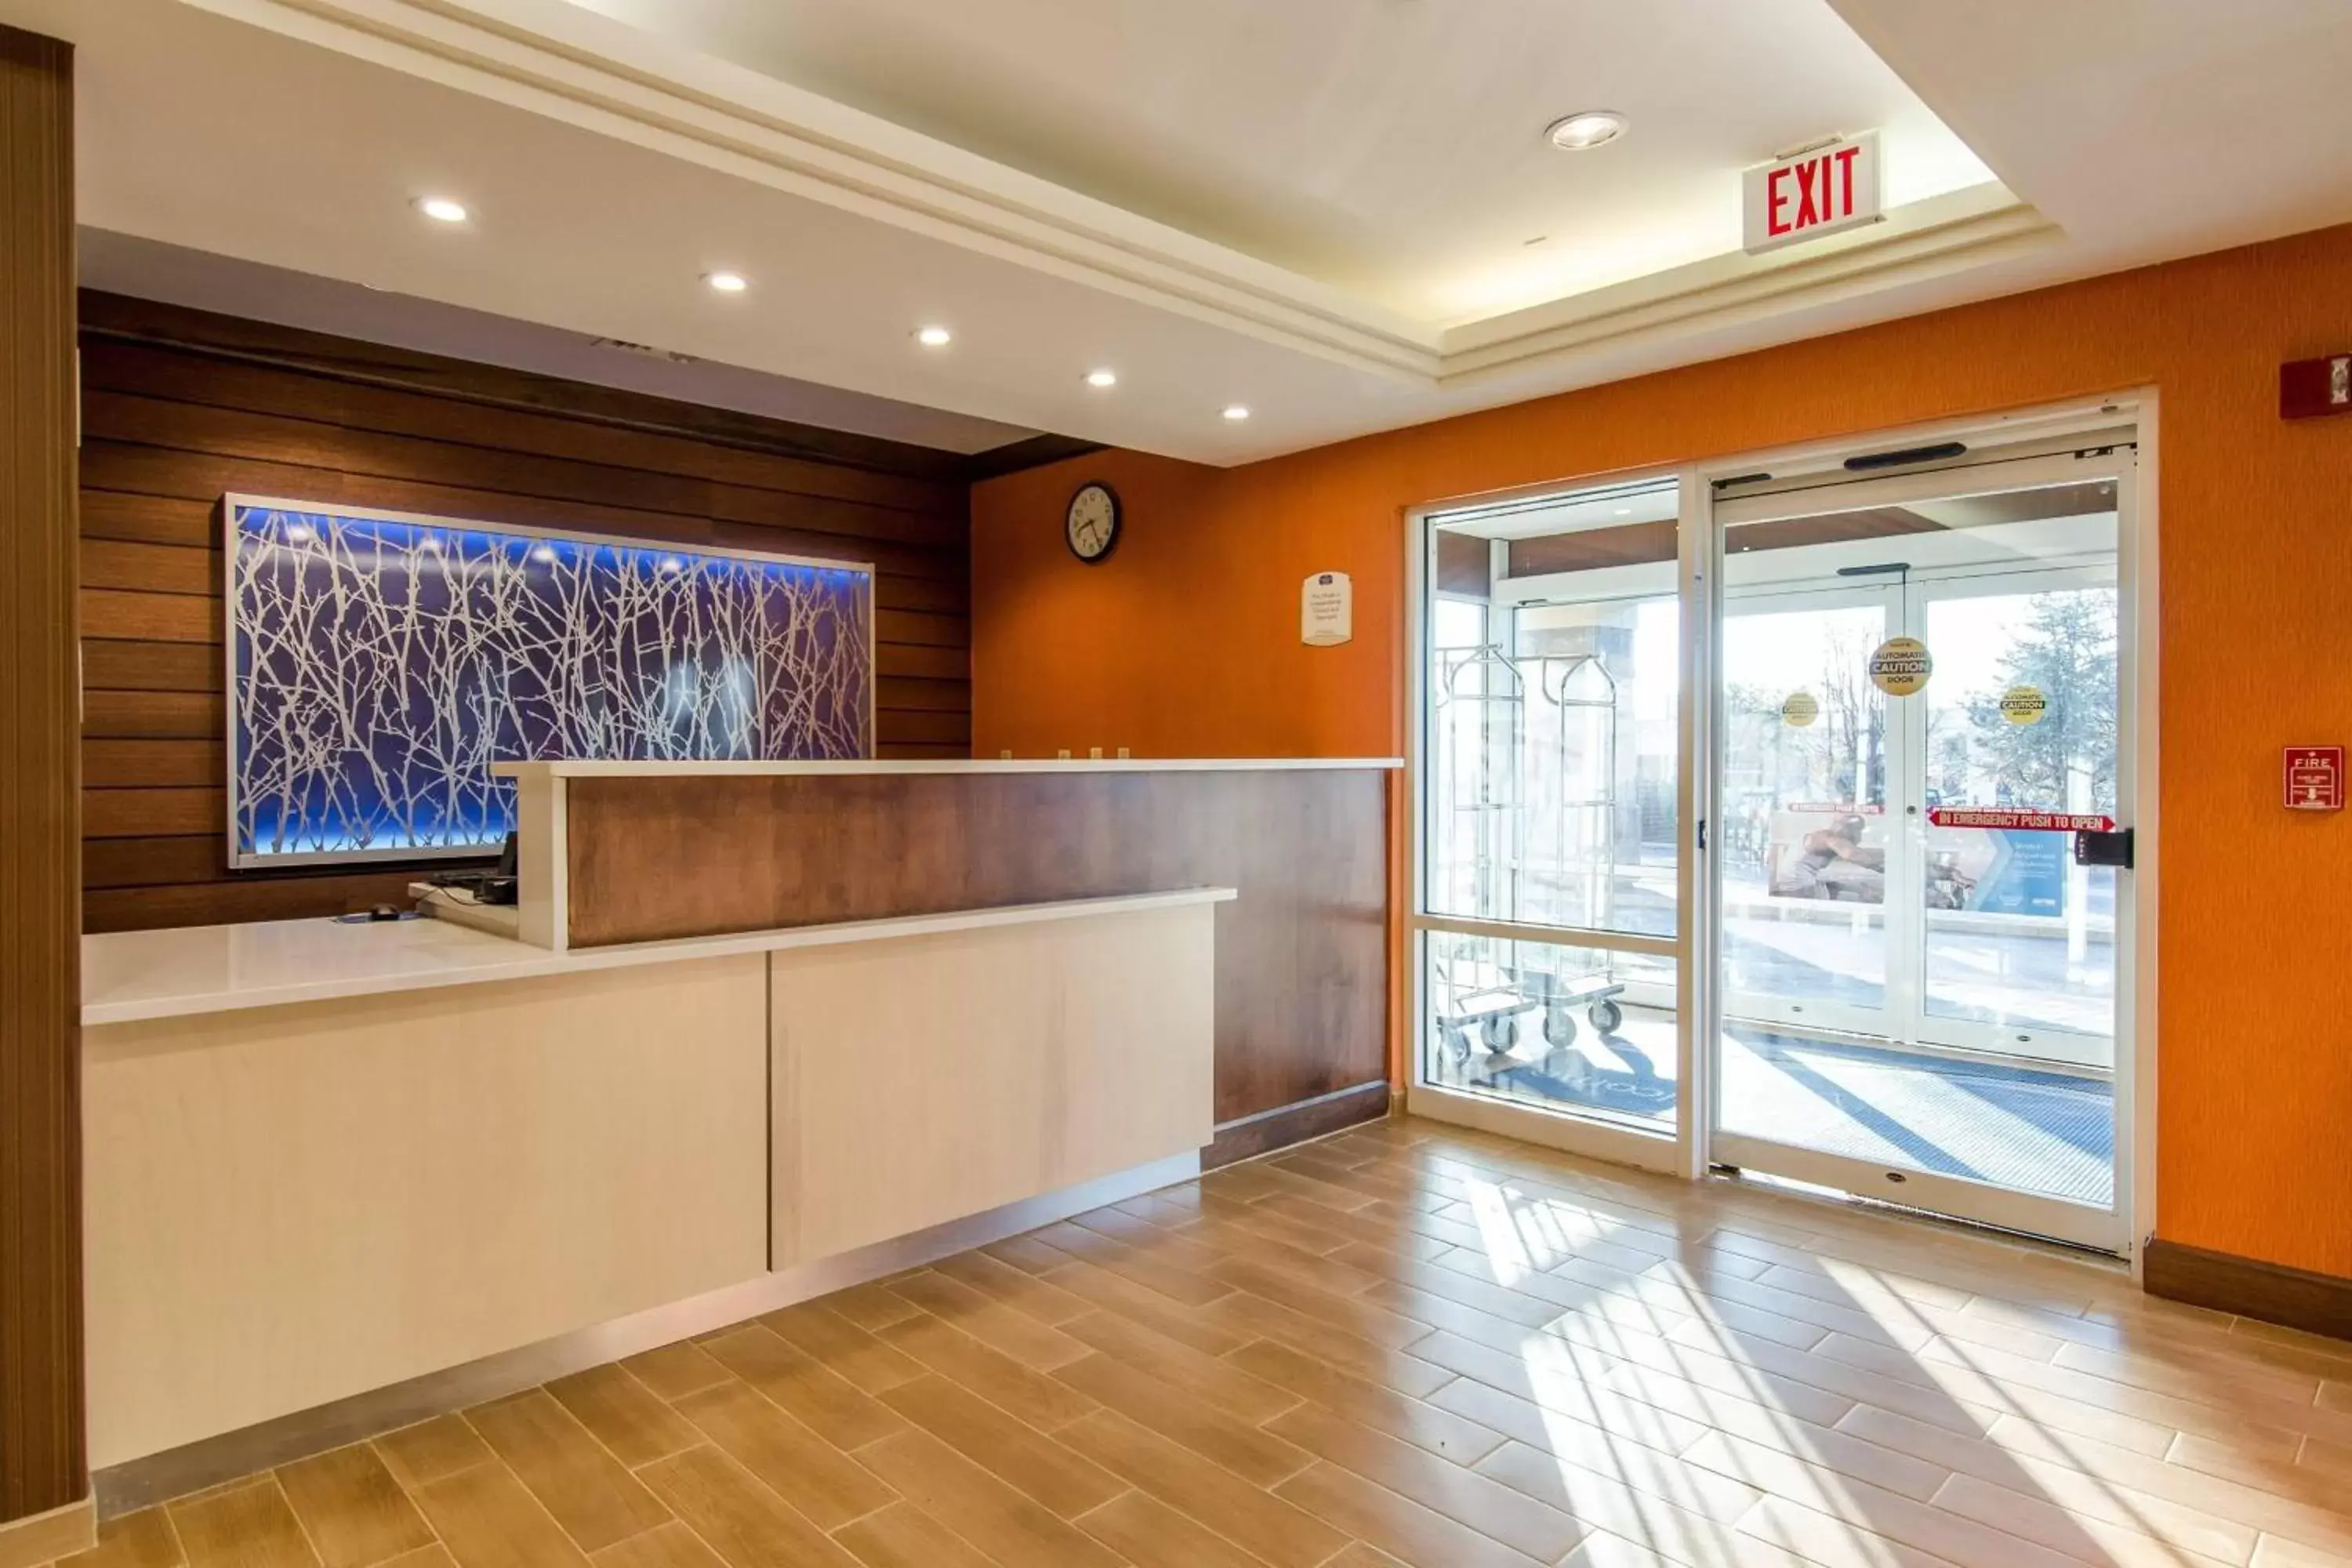 Lobby or reception in Fairfield Inn and Suites by Marriott Potomac Mills Woodbridge